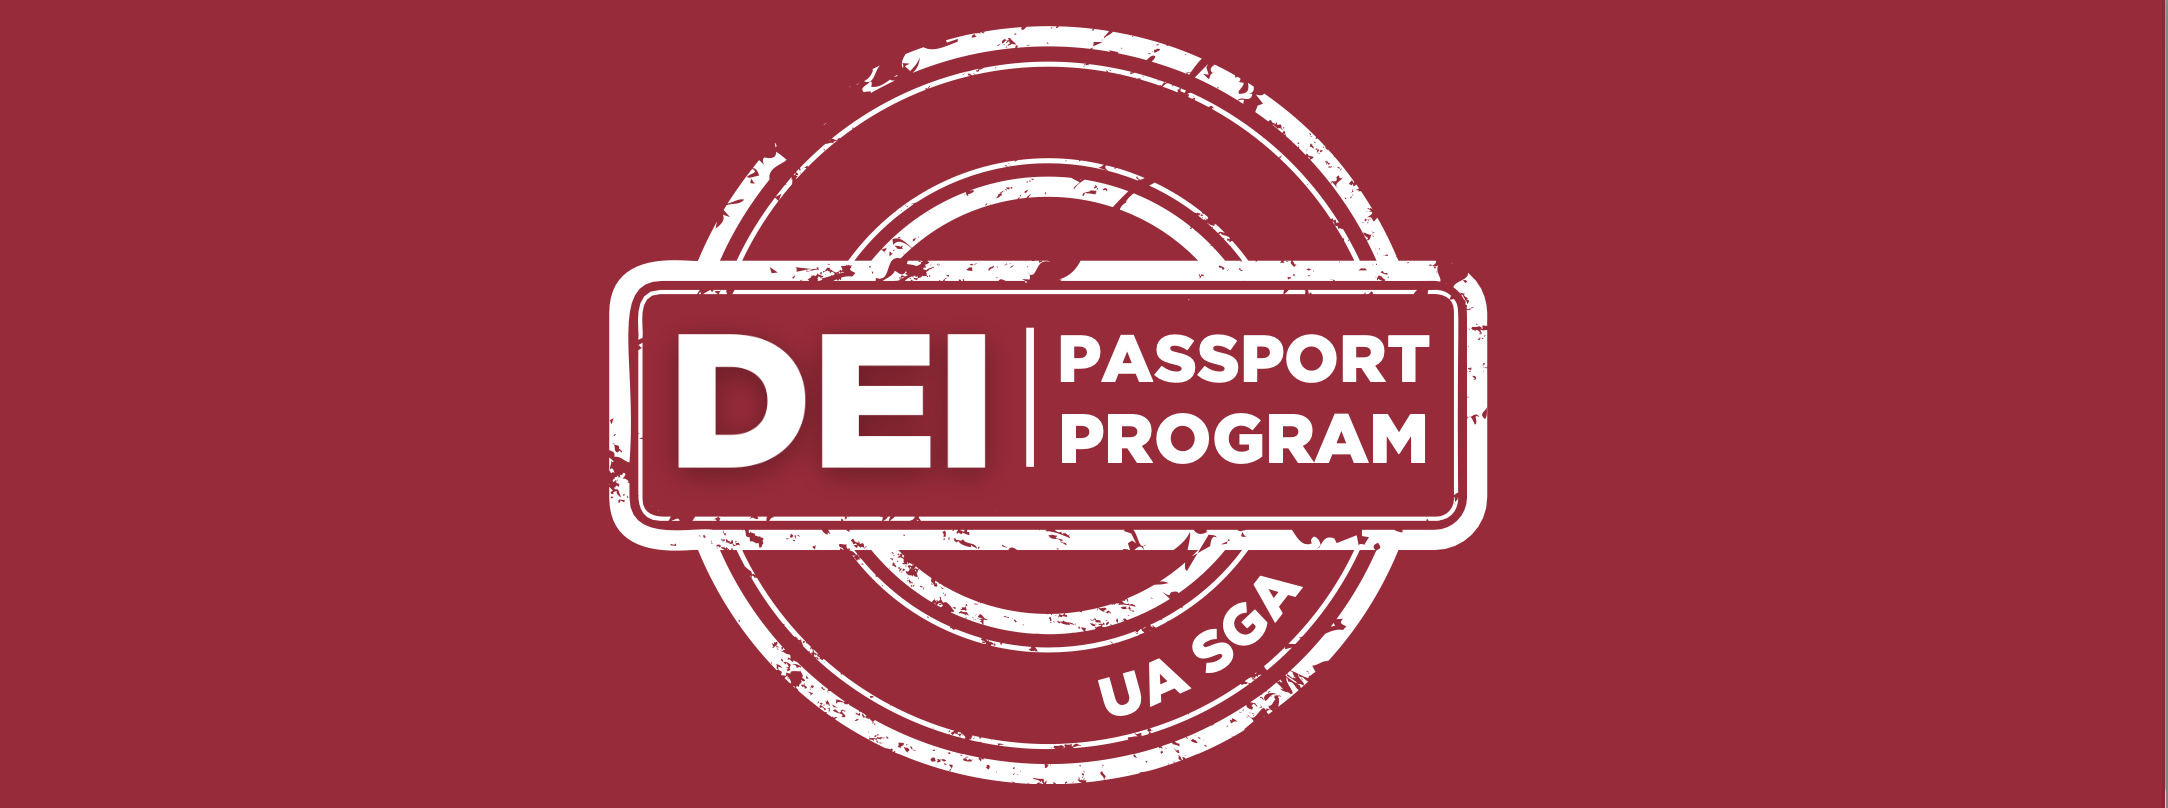 DEI Passport Program UA SGA